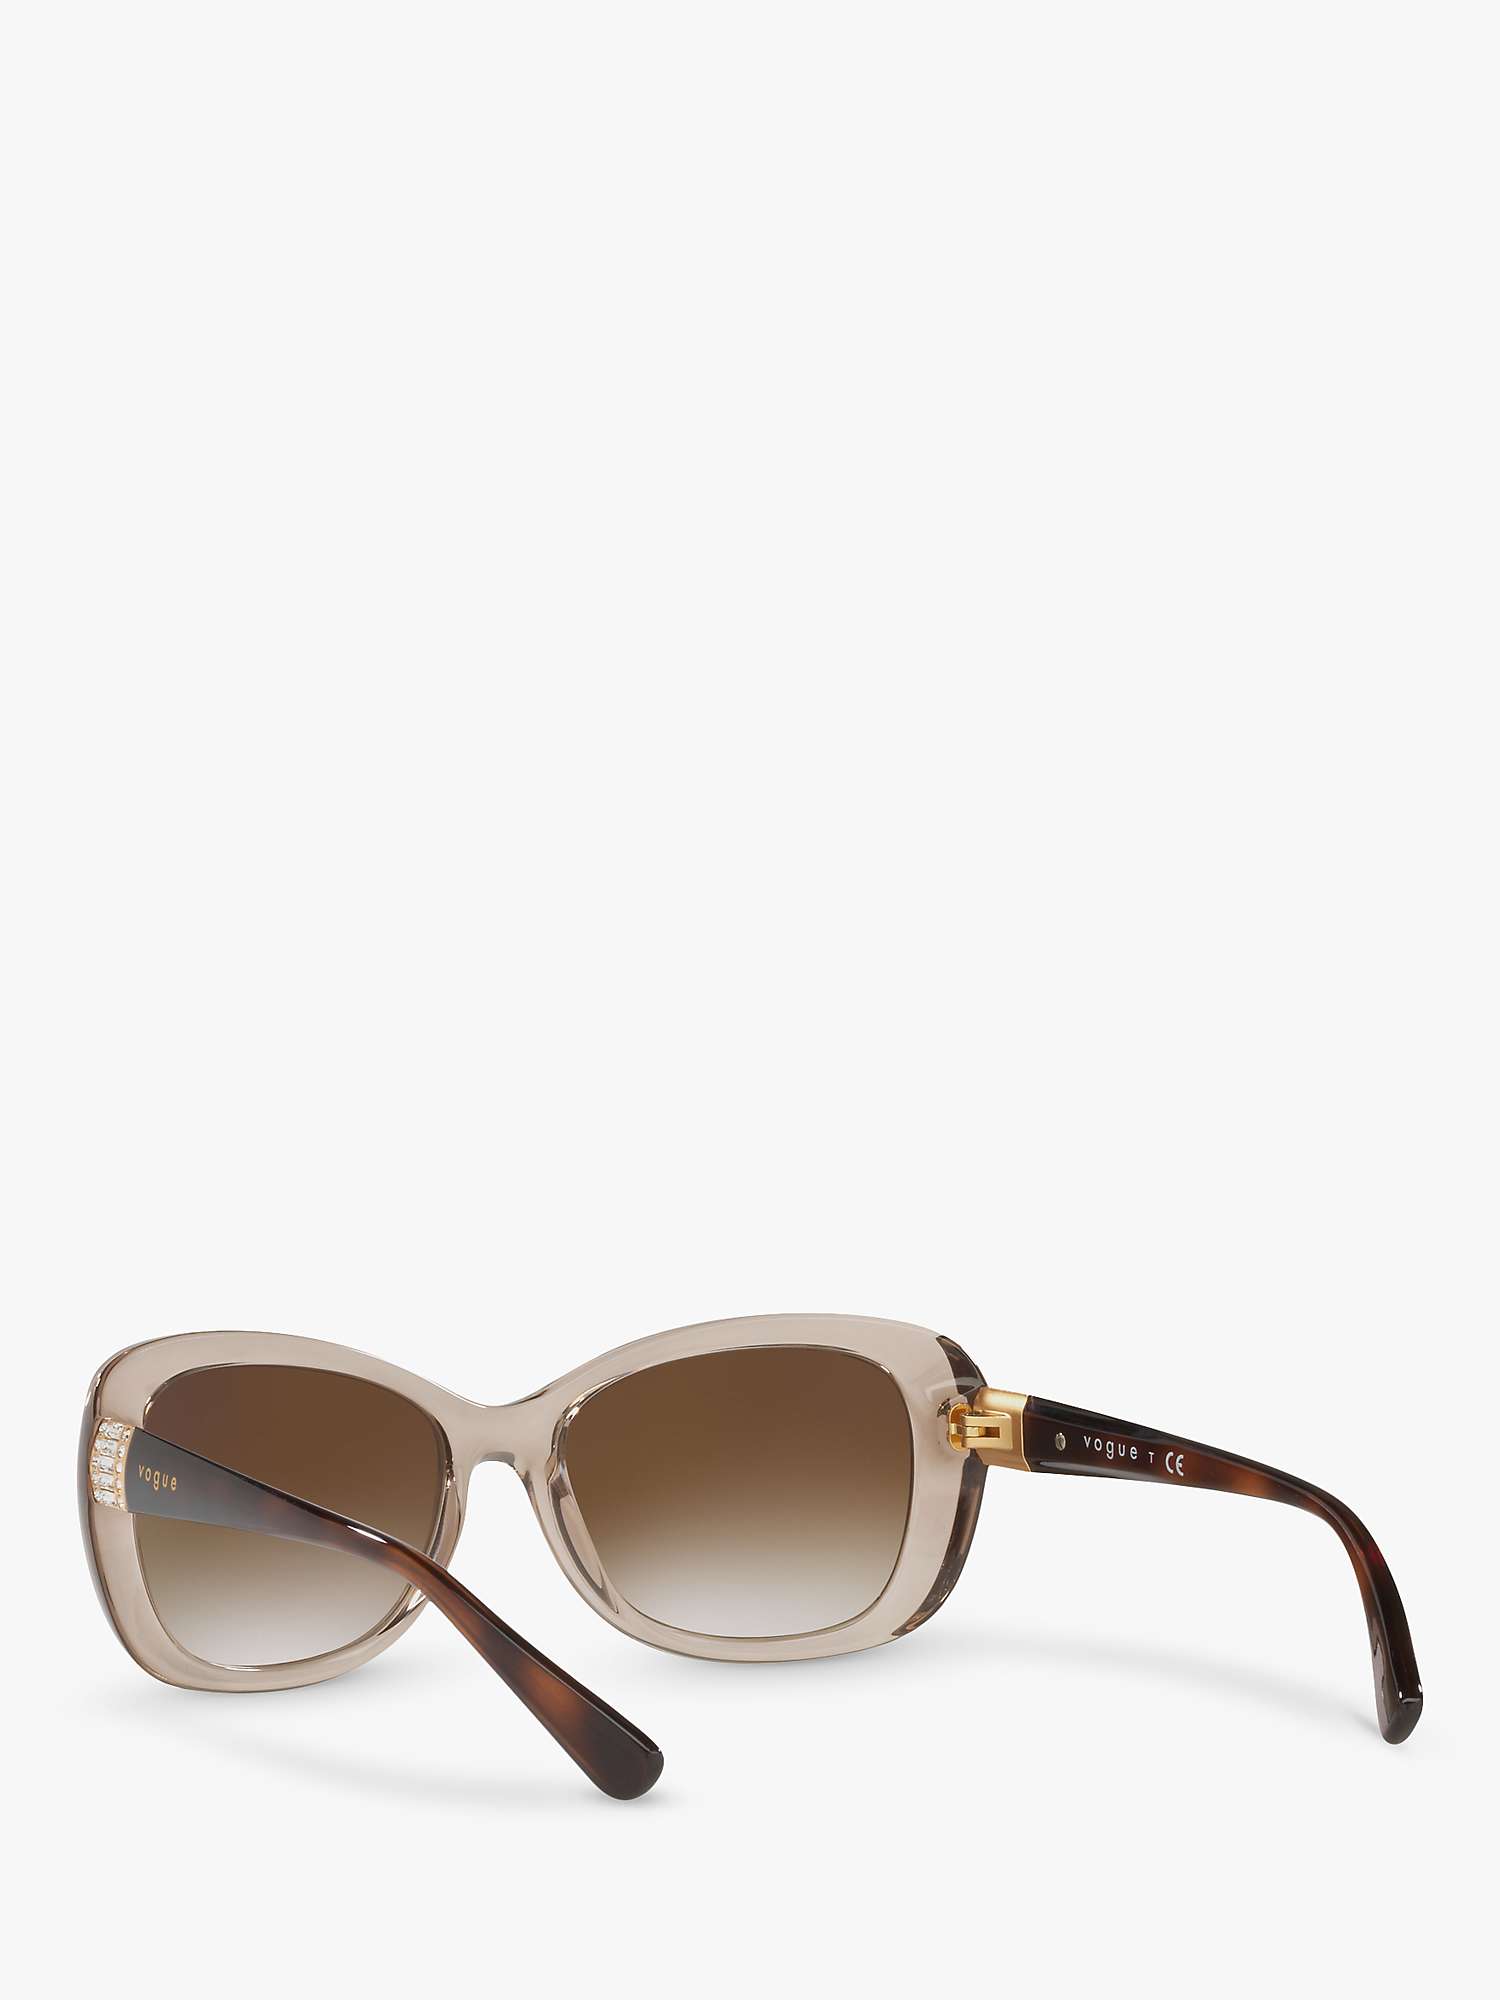 Buy Vogue VO2943SB Women's Butterfly Sunglasses, Transparent Light Brown/Brown Gradient Online at johnlewis.com